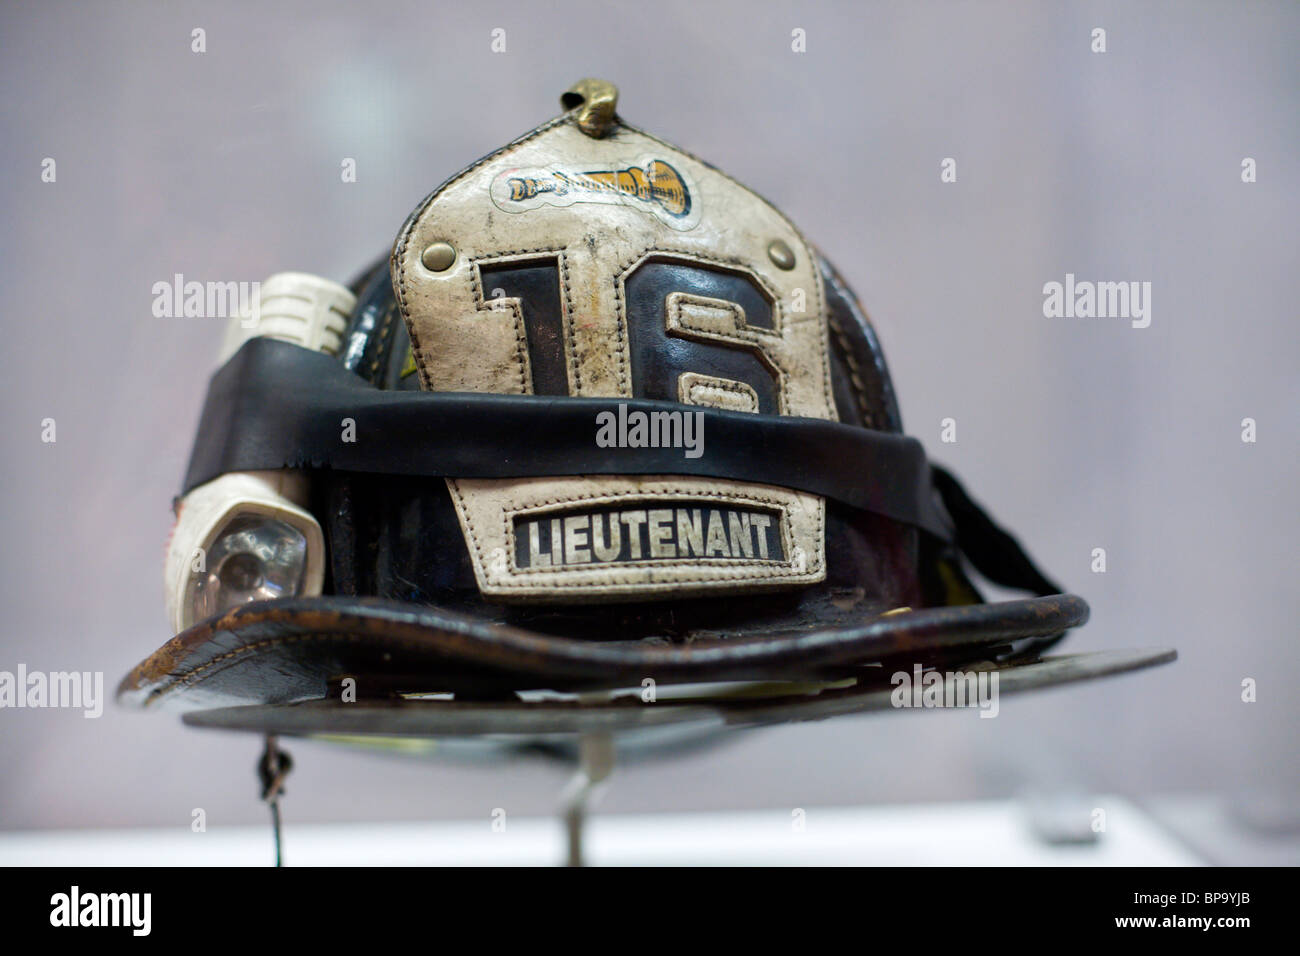 A Firefighter's Helmet Stock Photo